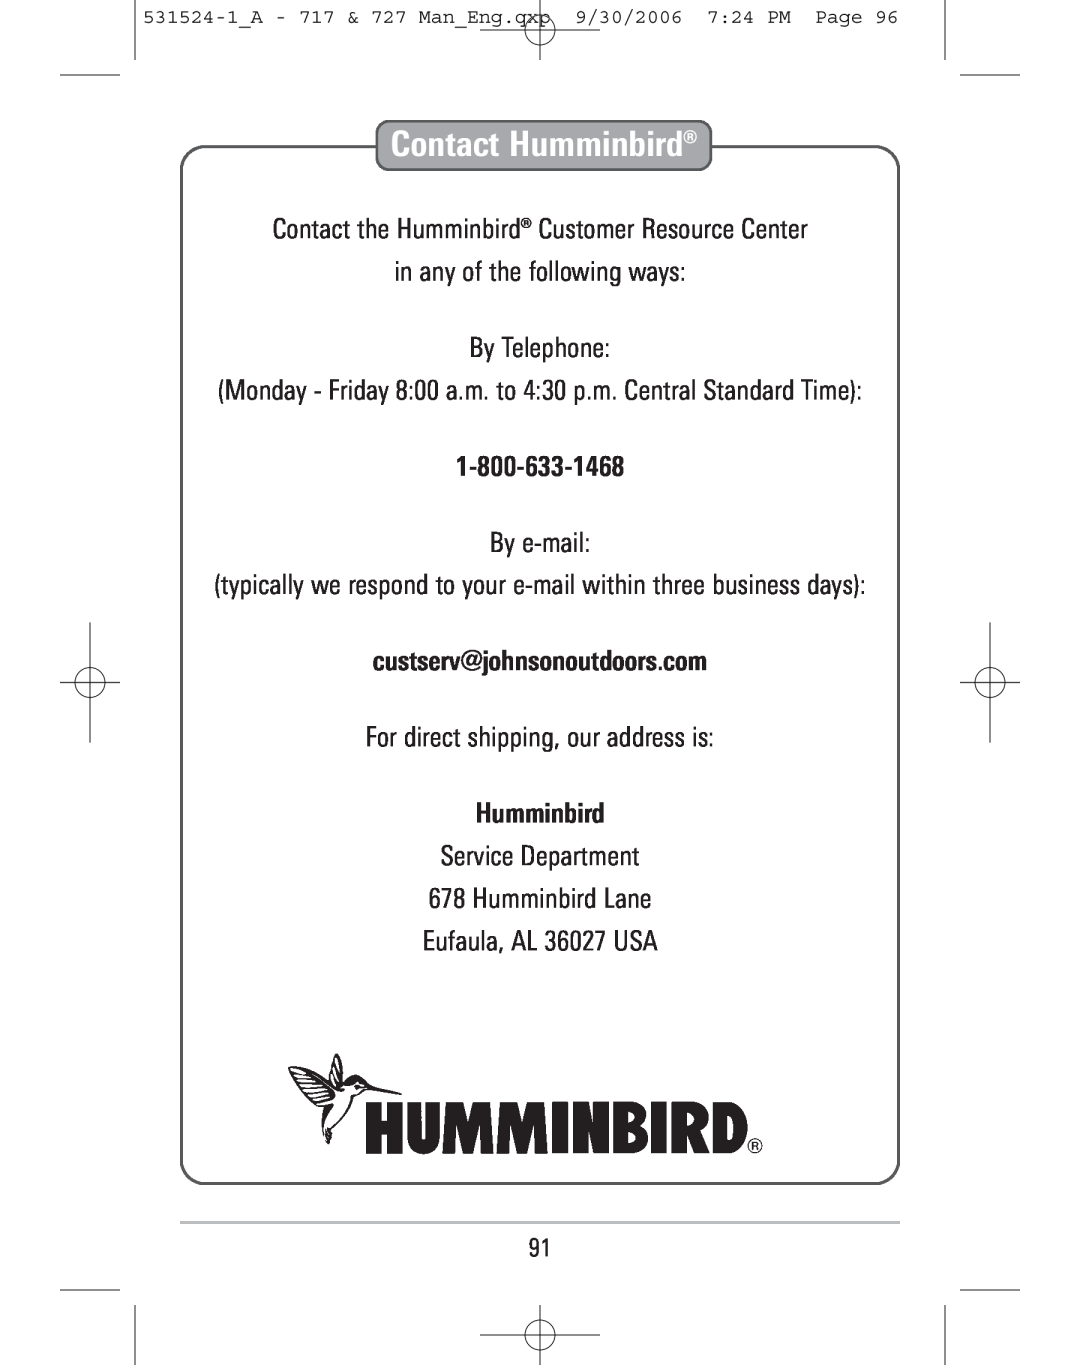 Humminbird 717, 727 manual Contact Humminbird, custserv@johnsonoutdoors.com 